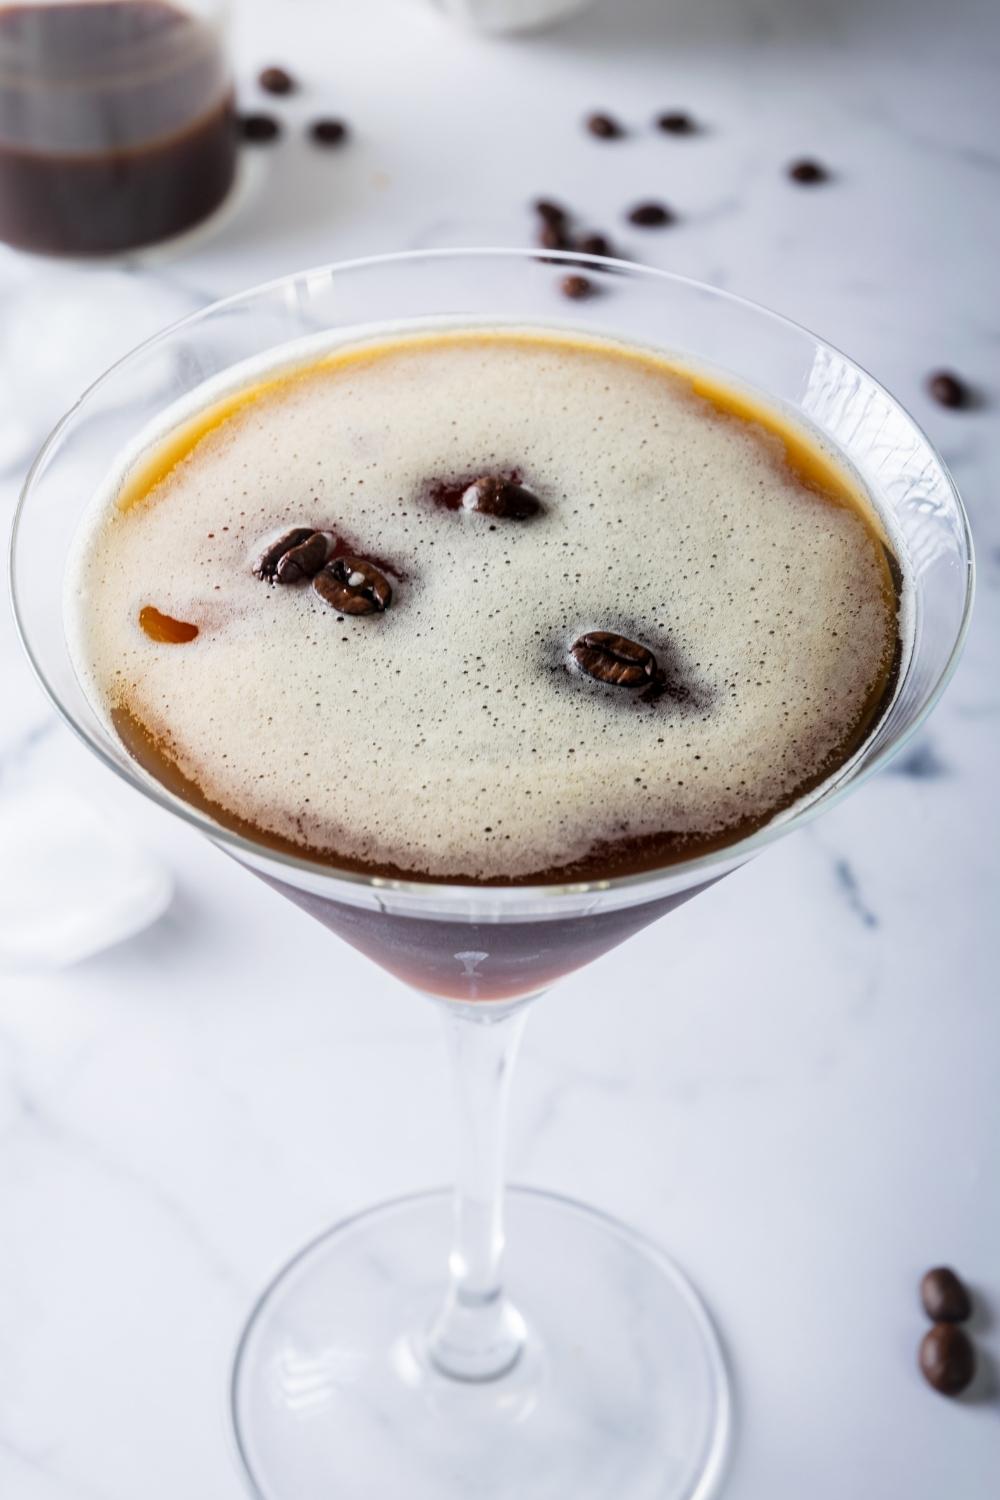 A martini glass with homemade espresso martini garnished with espresso beans.